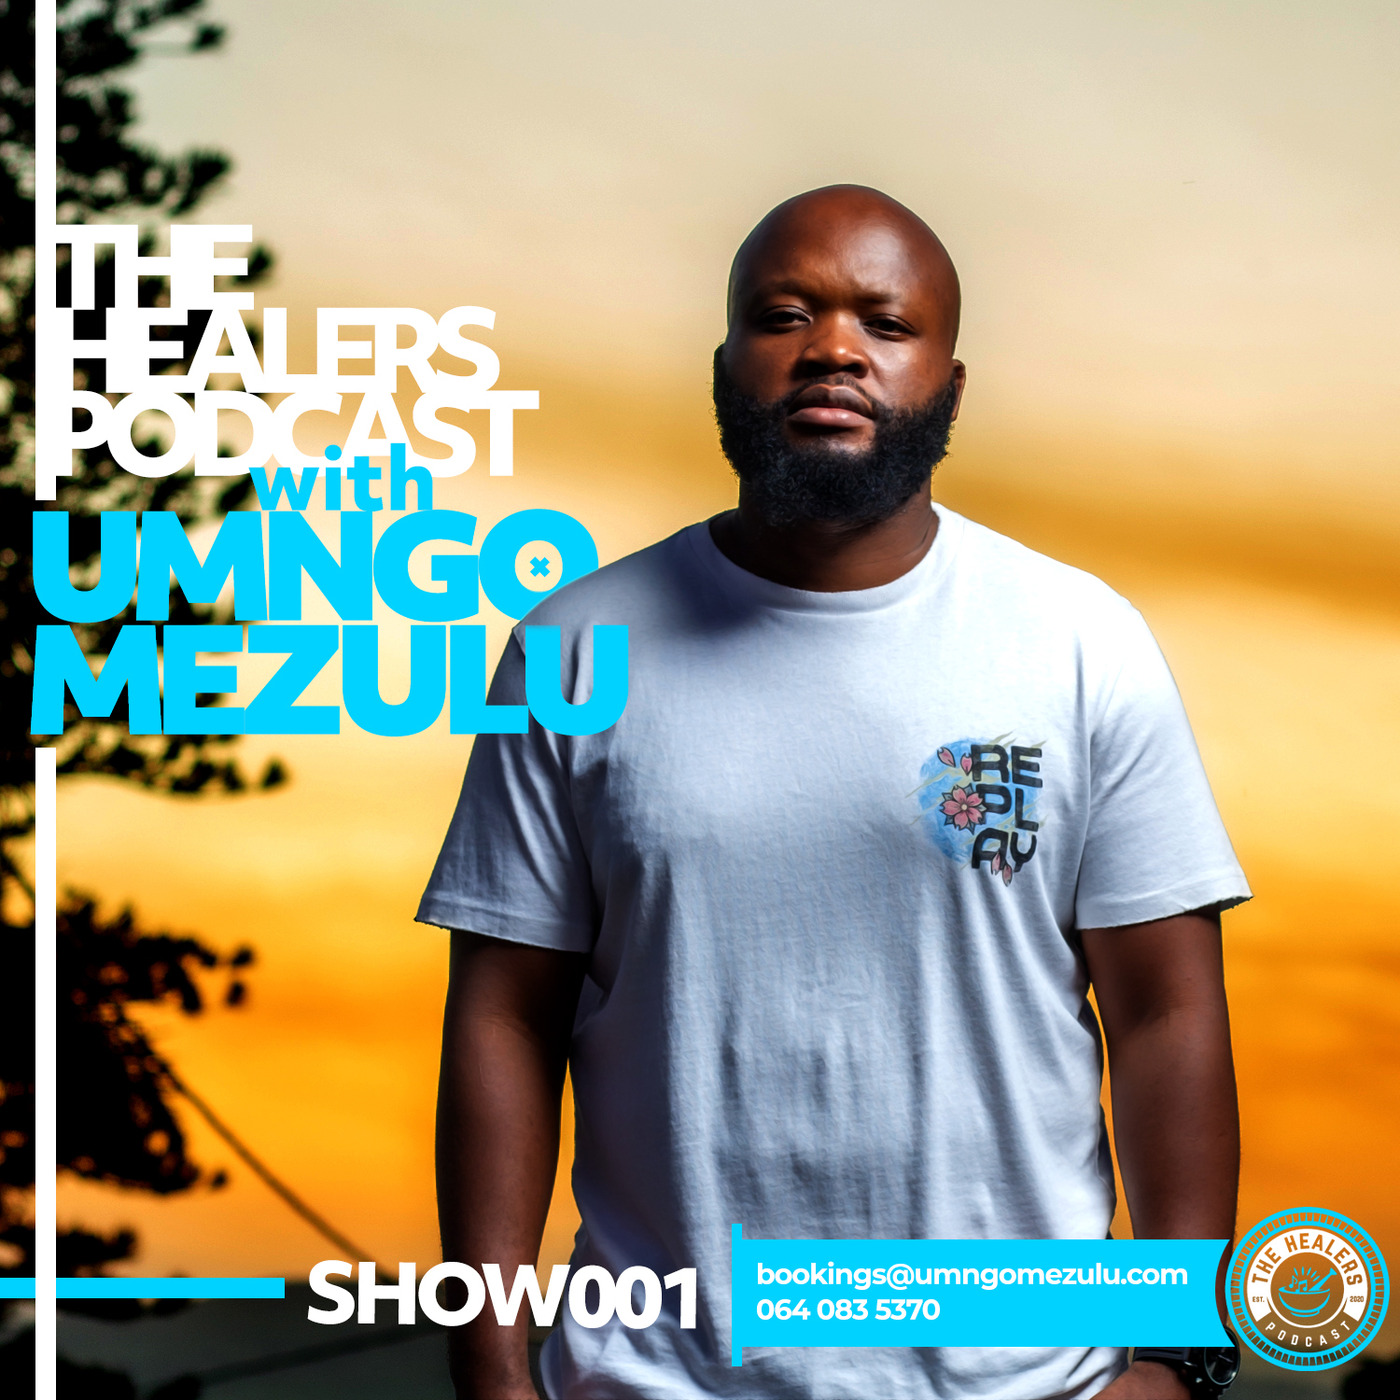 "Show 001" The Healers Podcast With UMngomezulu